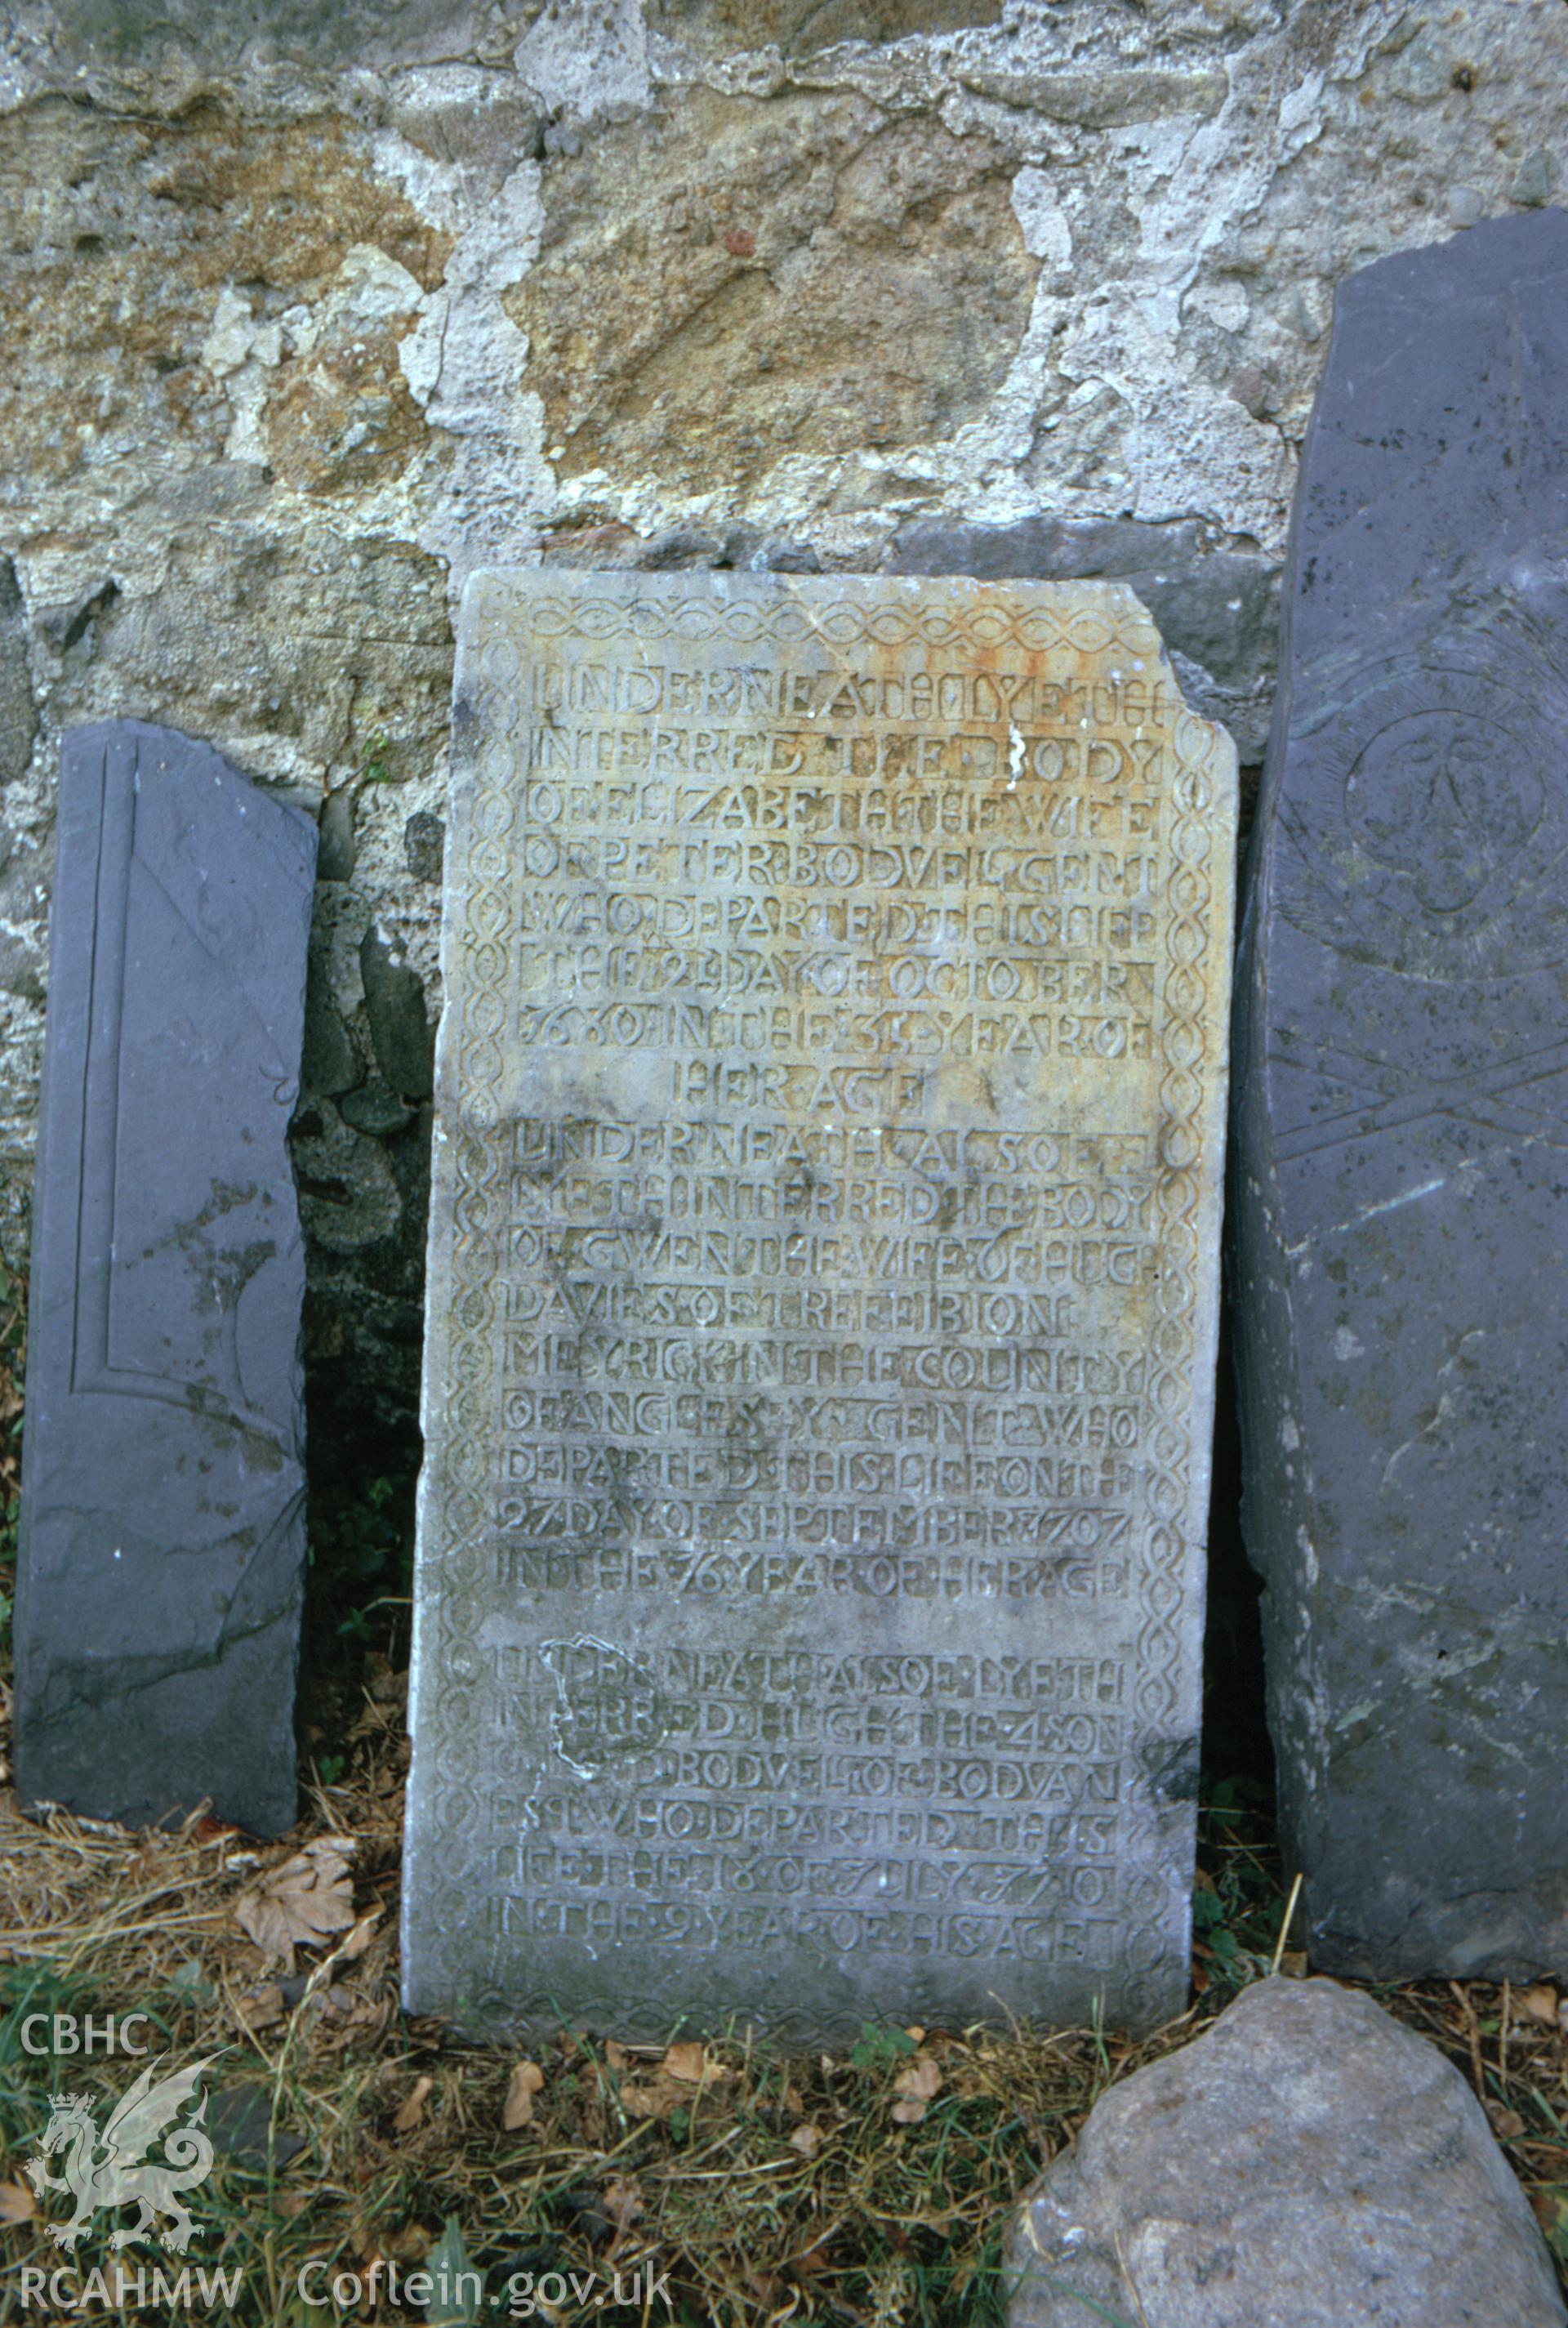 Colour slide showing inscribed memorial stone at Llanfaglan Church.